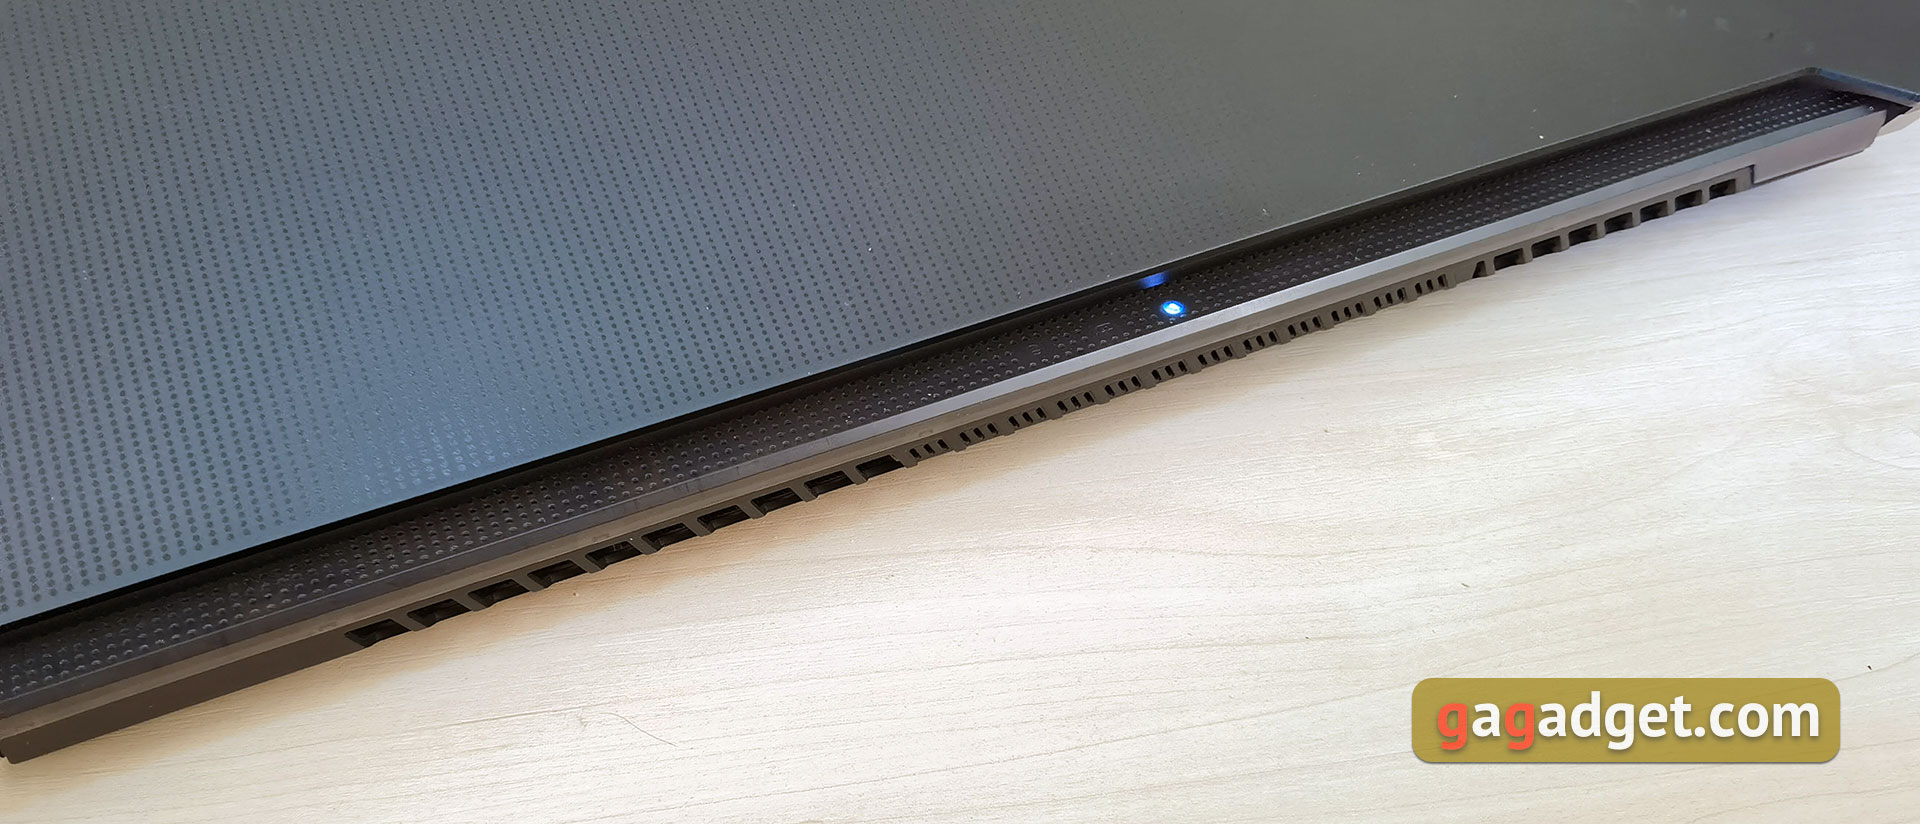 ASUS ROG Zephyrus S17 GX703 im Test: ein All-in-One-Gaming-Laptop-7